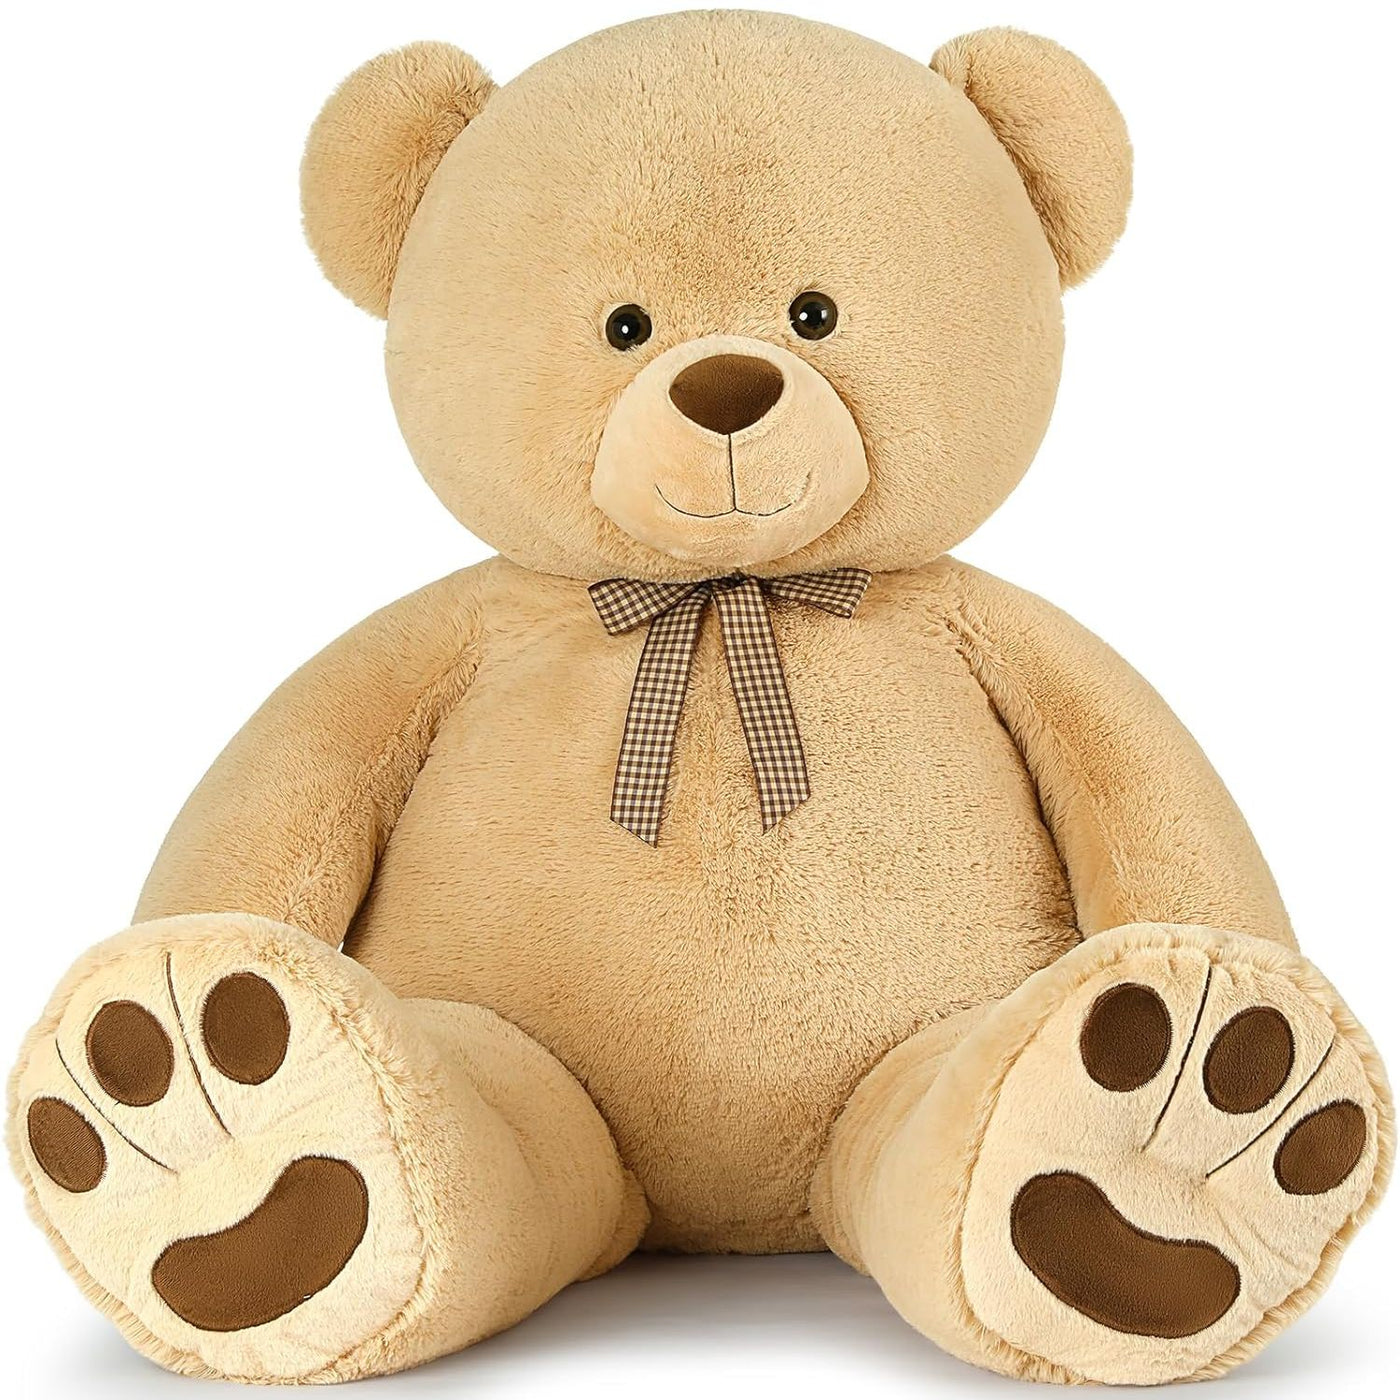 Giant Teddy Bear Plush Toy, Light Brown, 43/55 Inches - MorisMos Stuffed Animals